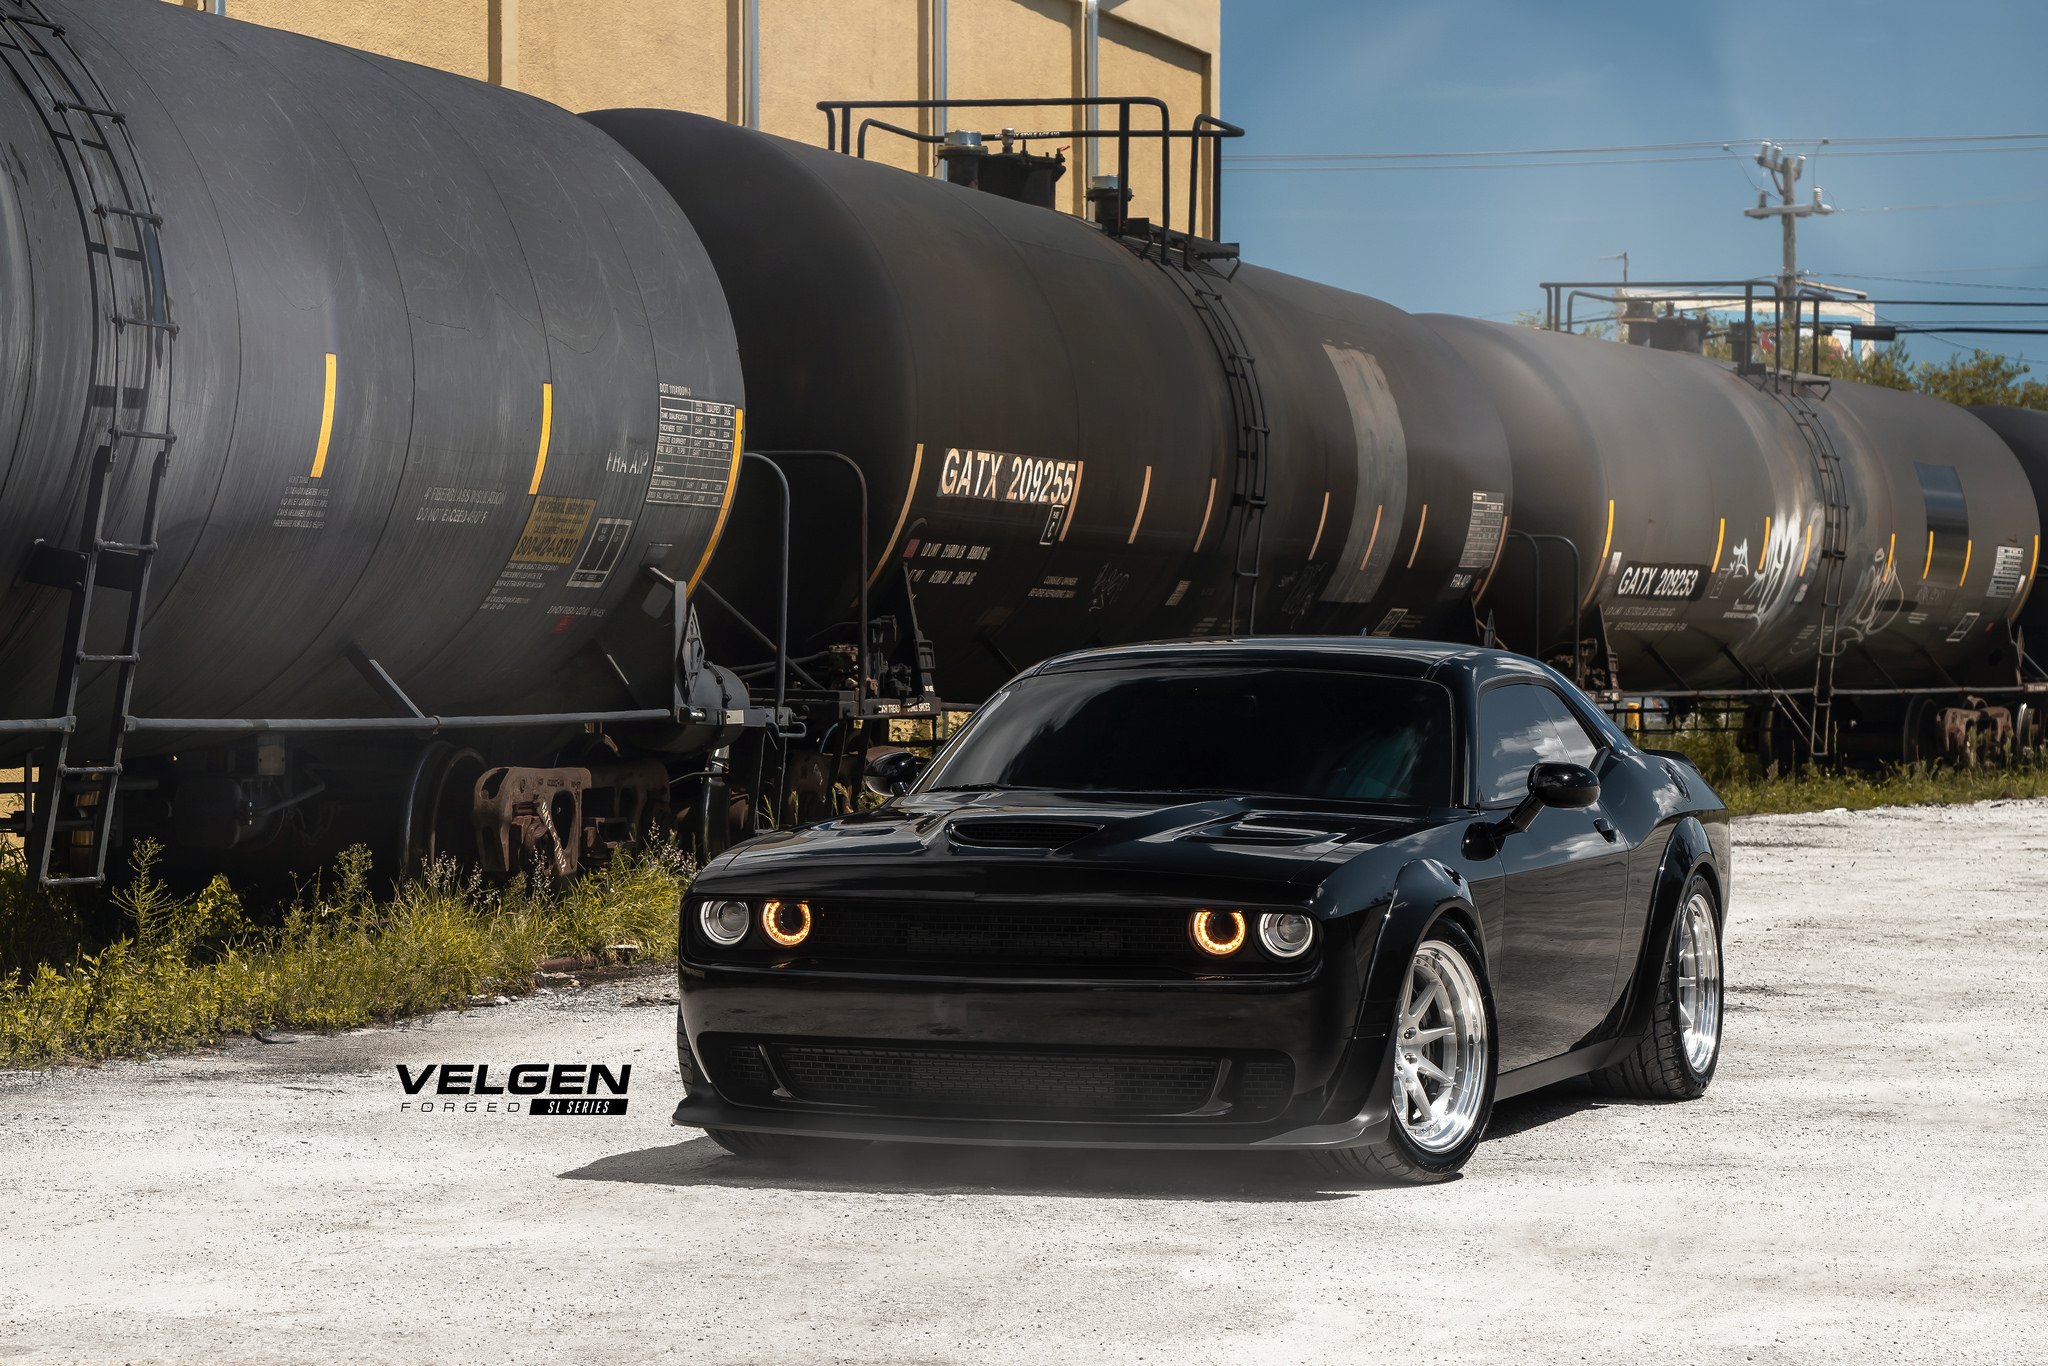 Aftermarket Vented Hood on Black Dodge Challenger - Photo by Velgen Wheels